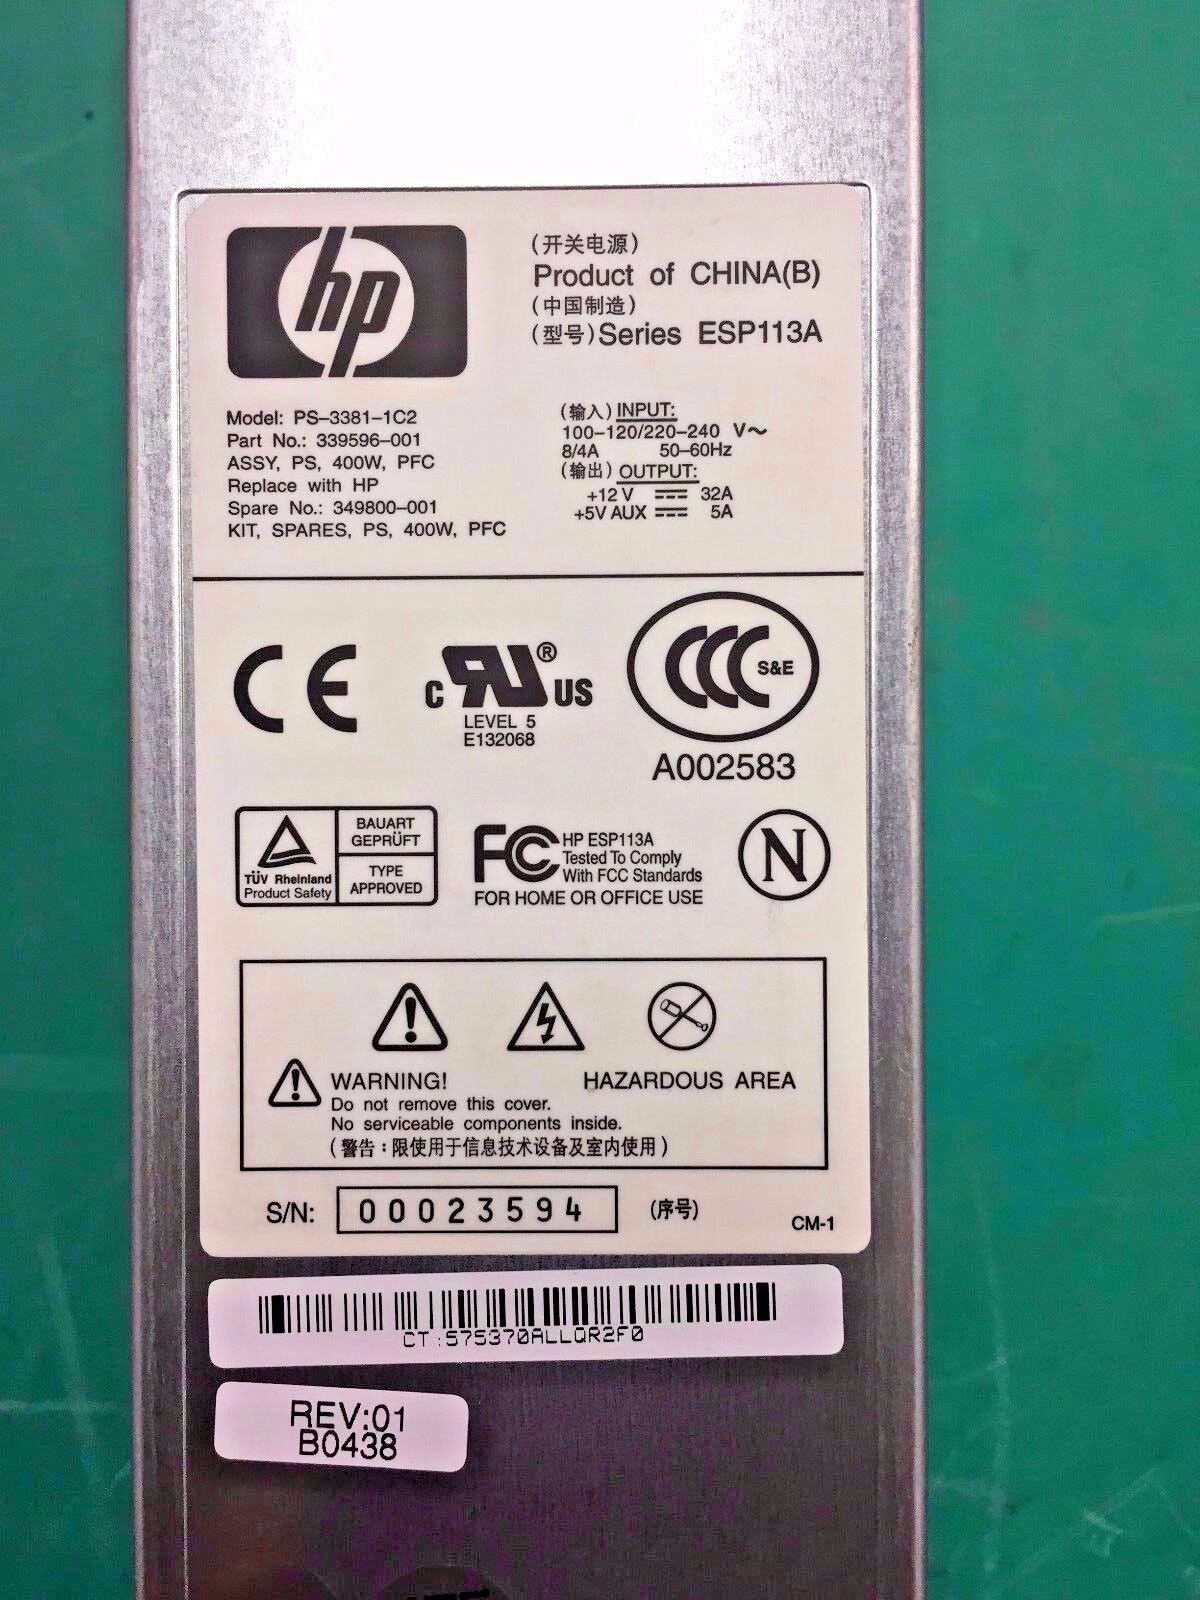 HP MSA1500 400W Power Supply 339596-001, 349800-001